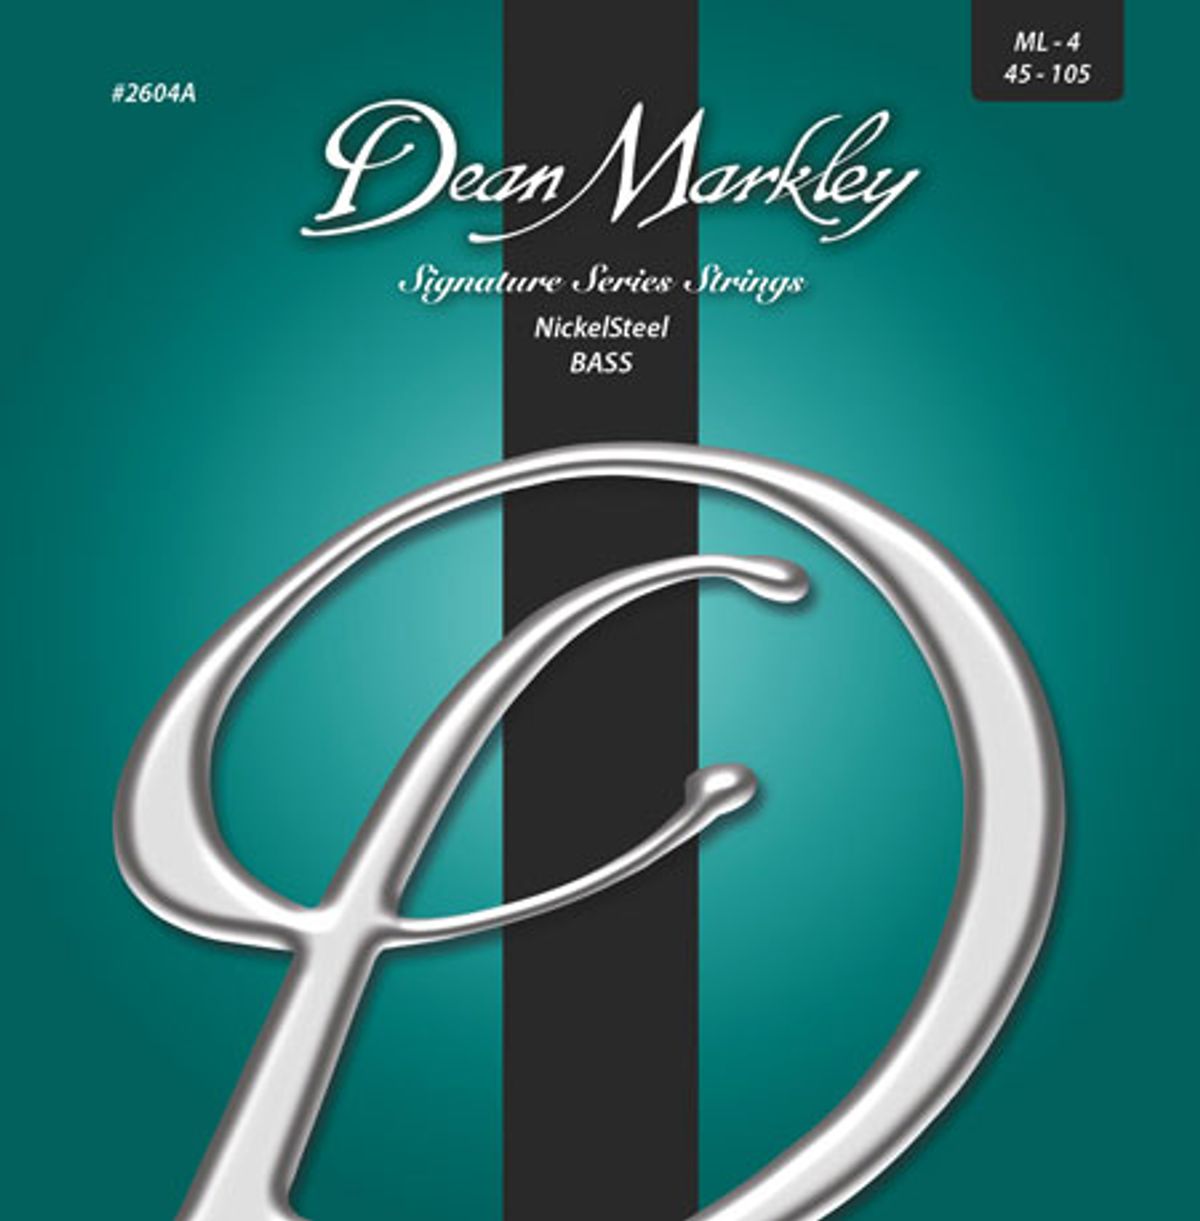 Dean Markley Announces New Signature Series Bass Strings